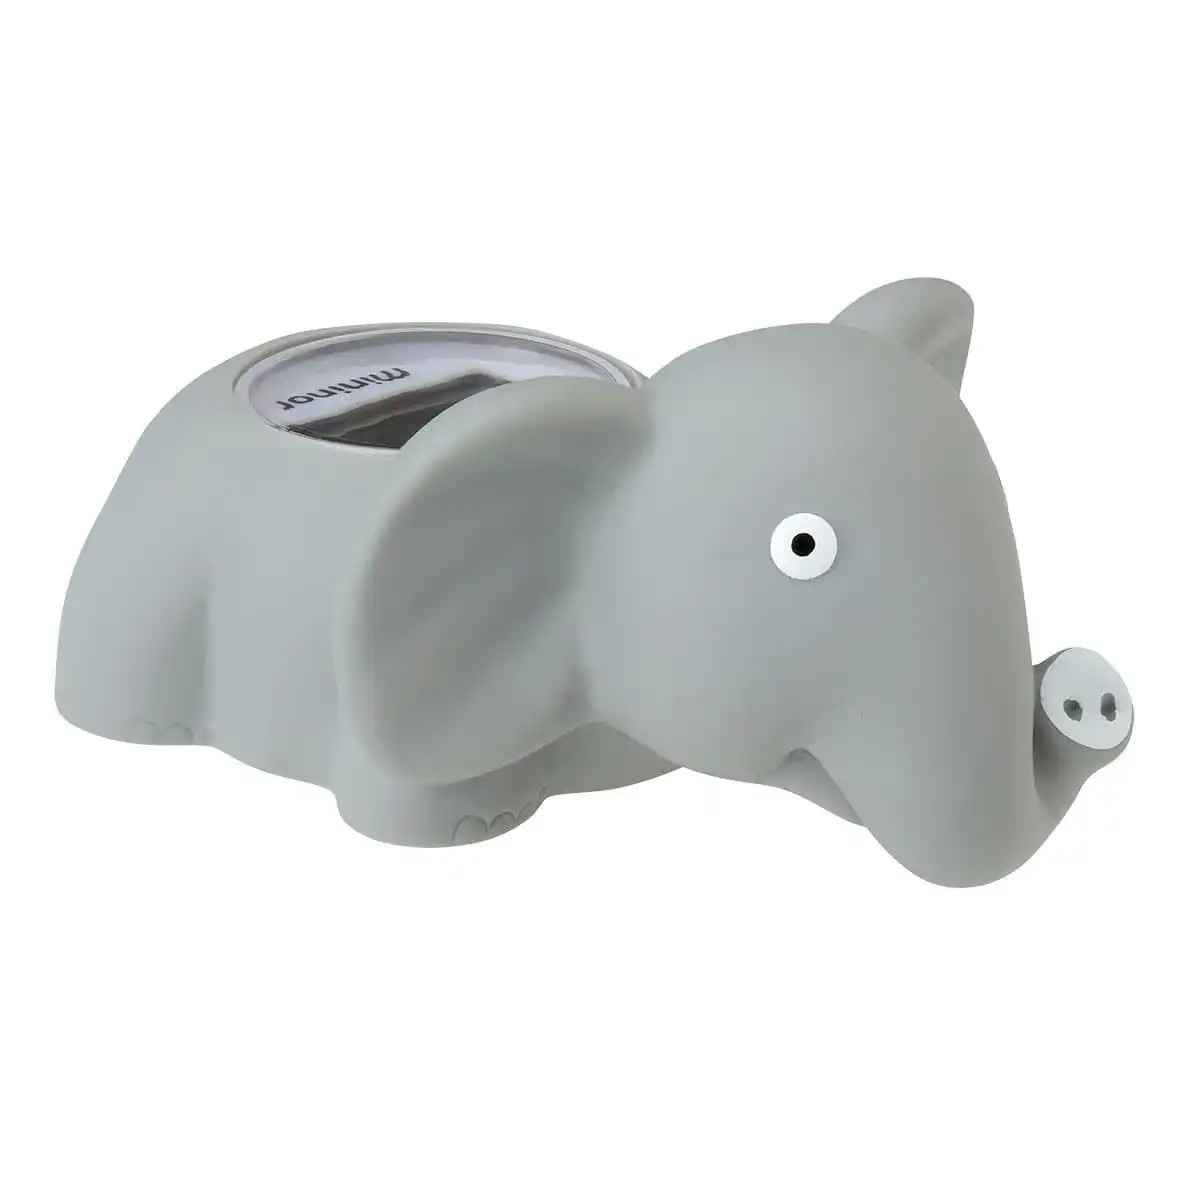 Mininor Baby/Infant Bath/Shower Animal Toy Safety Thermometer Grey Elephant